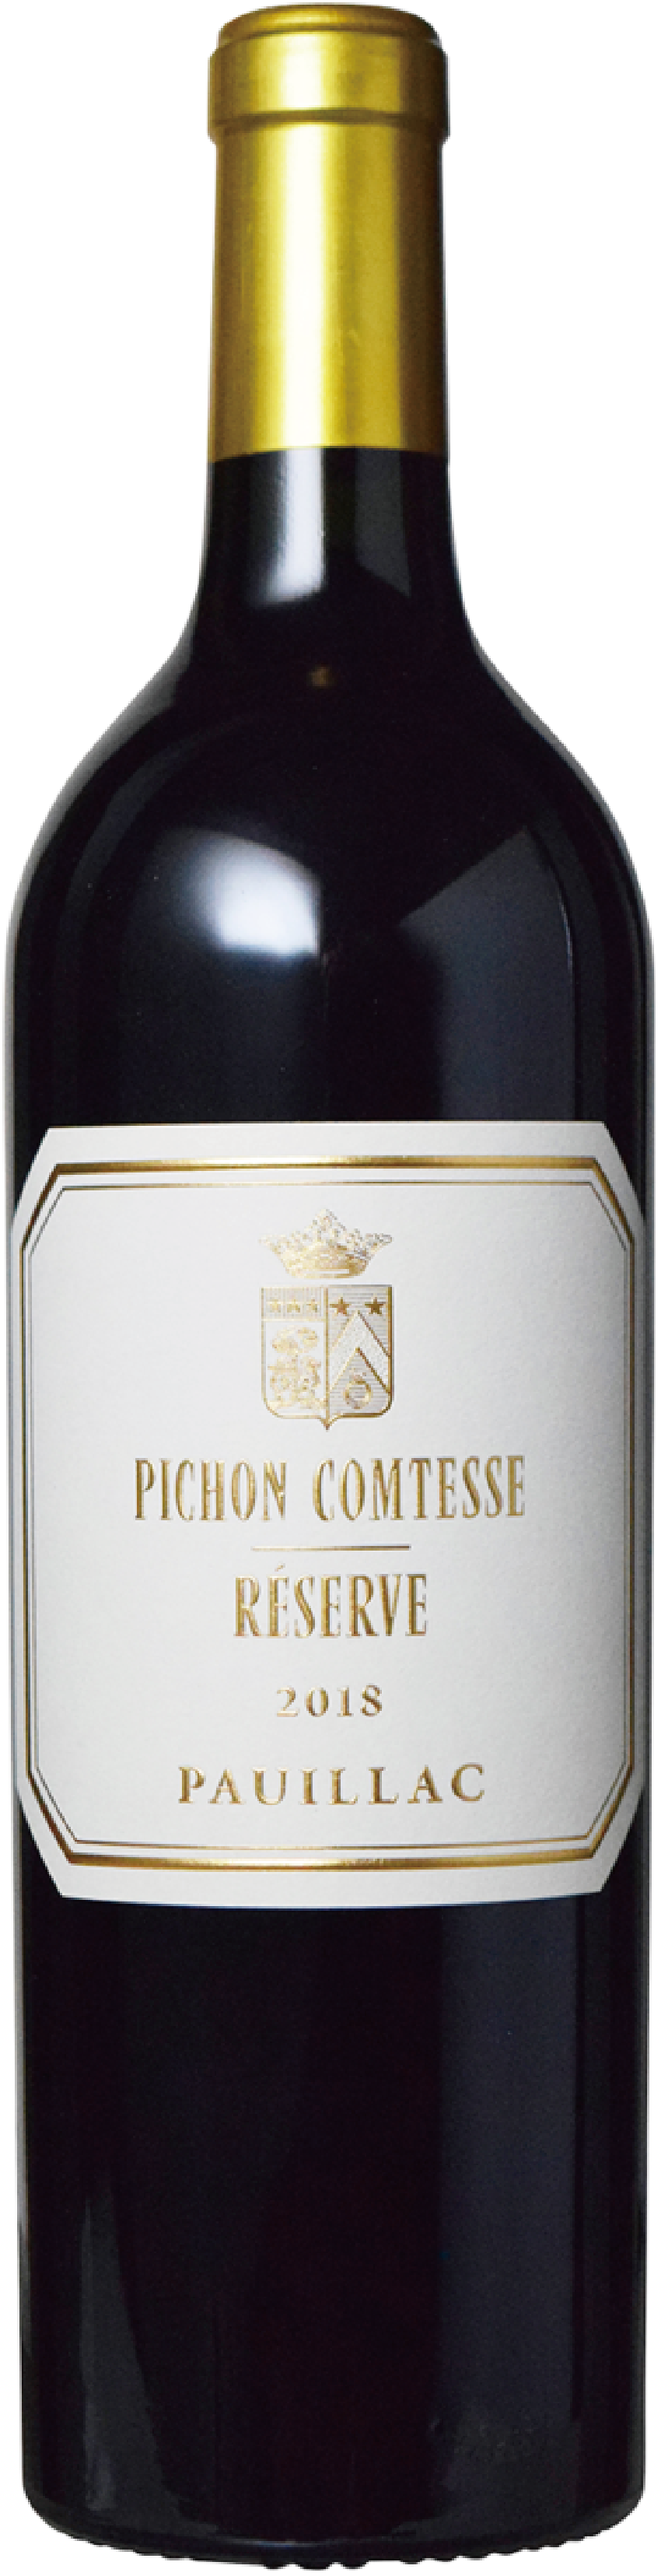 2018 Pichon Comtesse Reserve (Reserve de la Comtesse/2nd wine